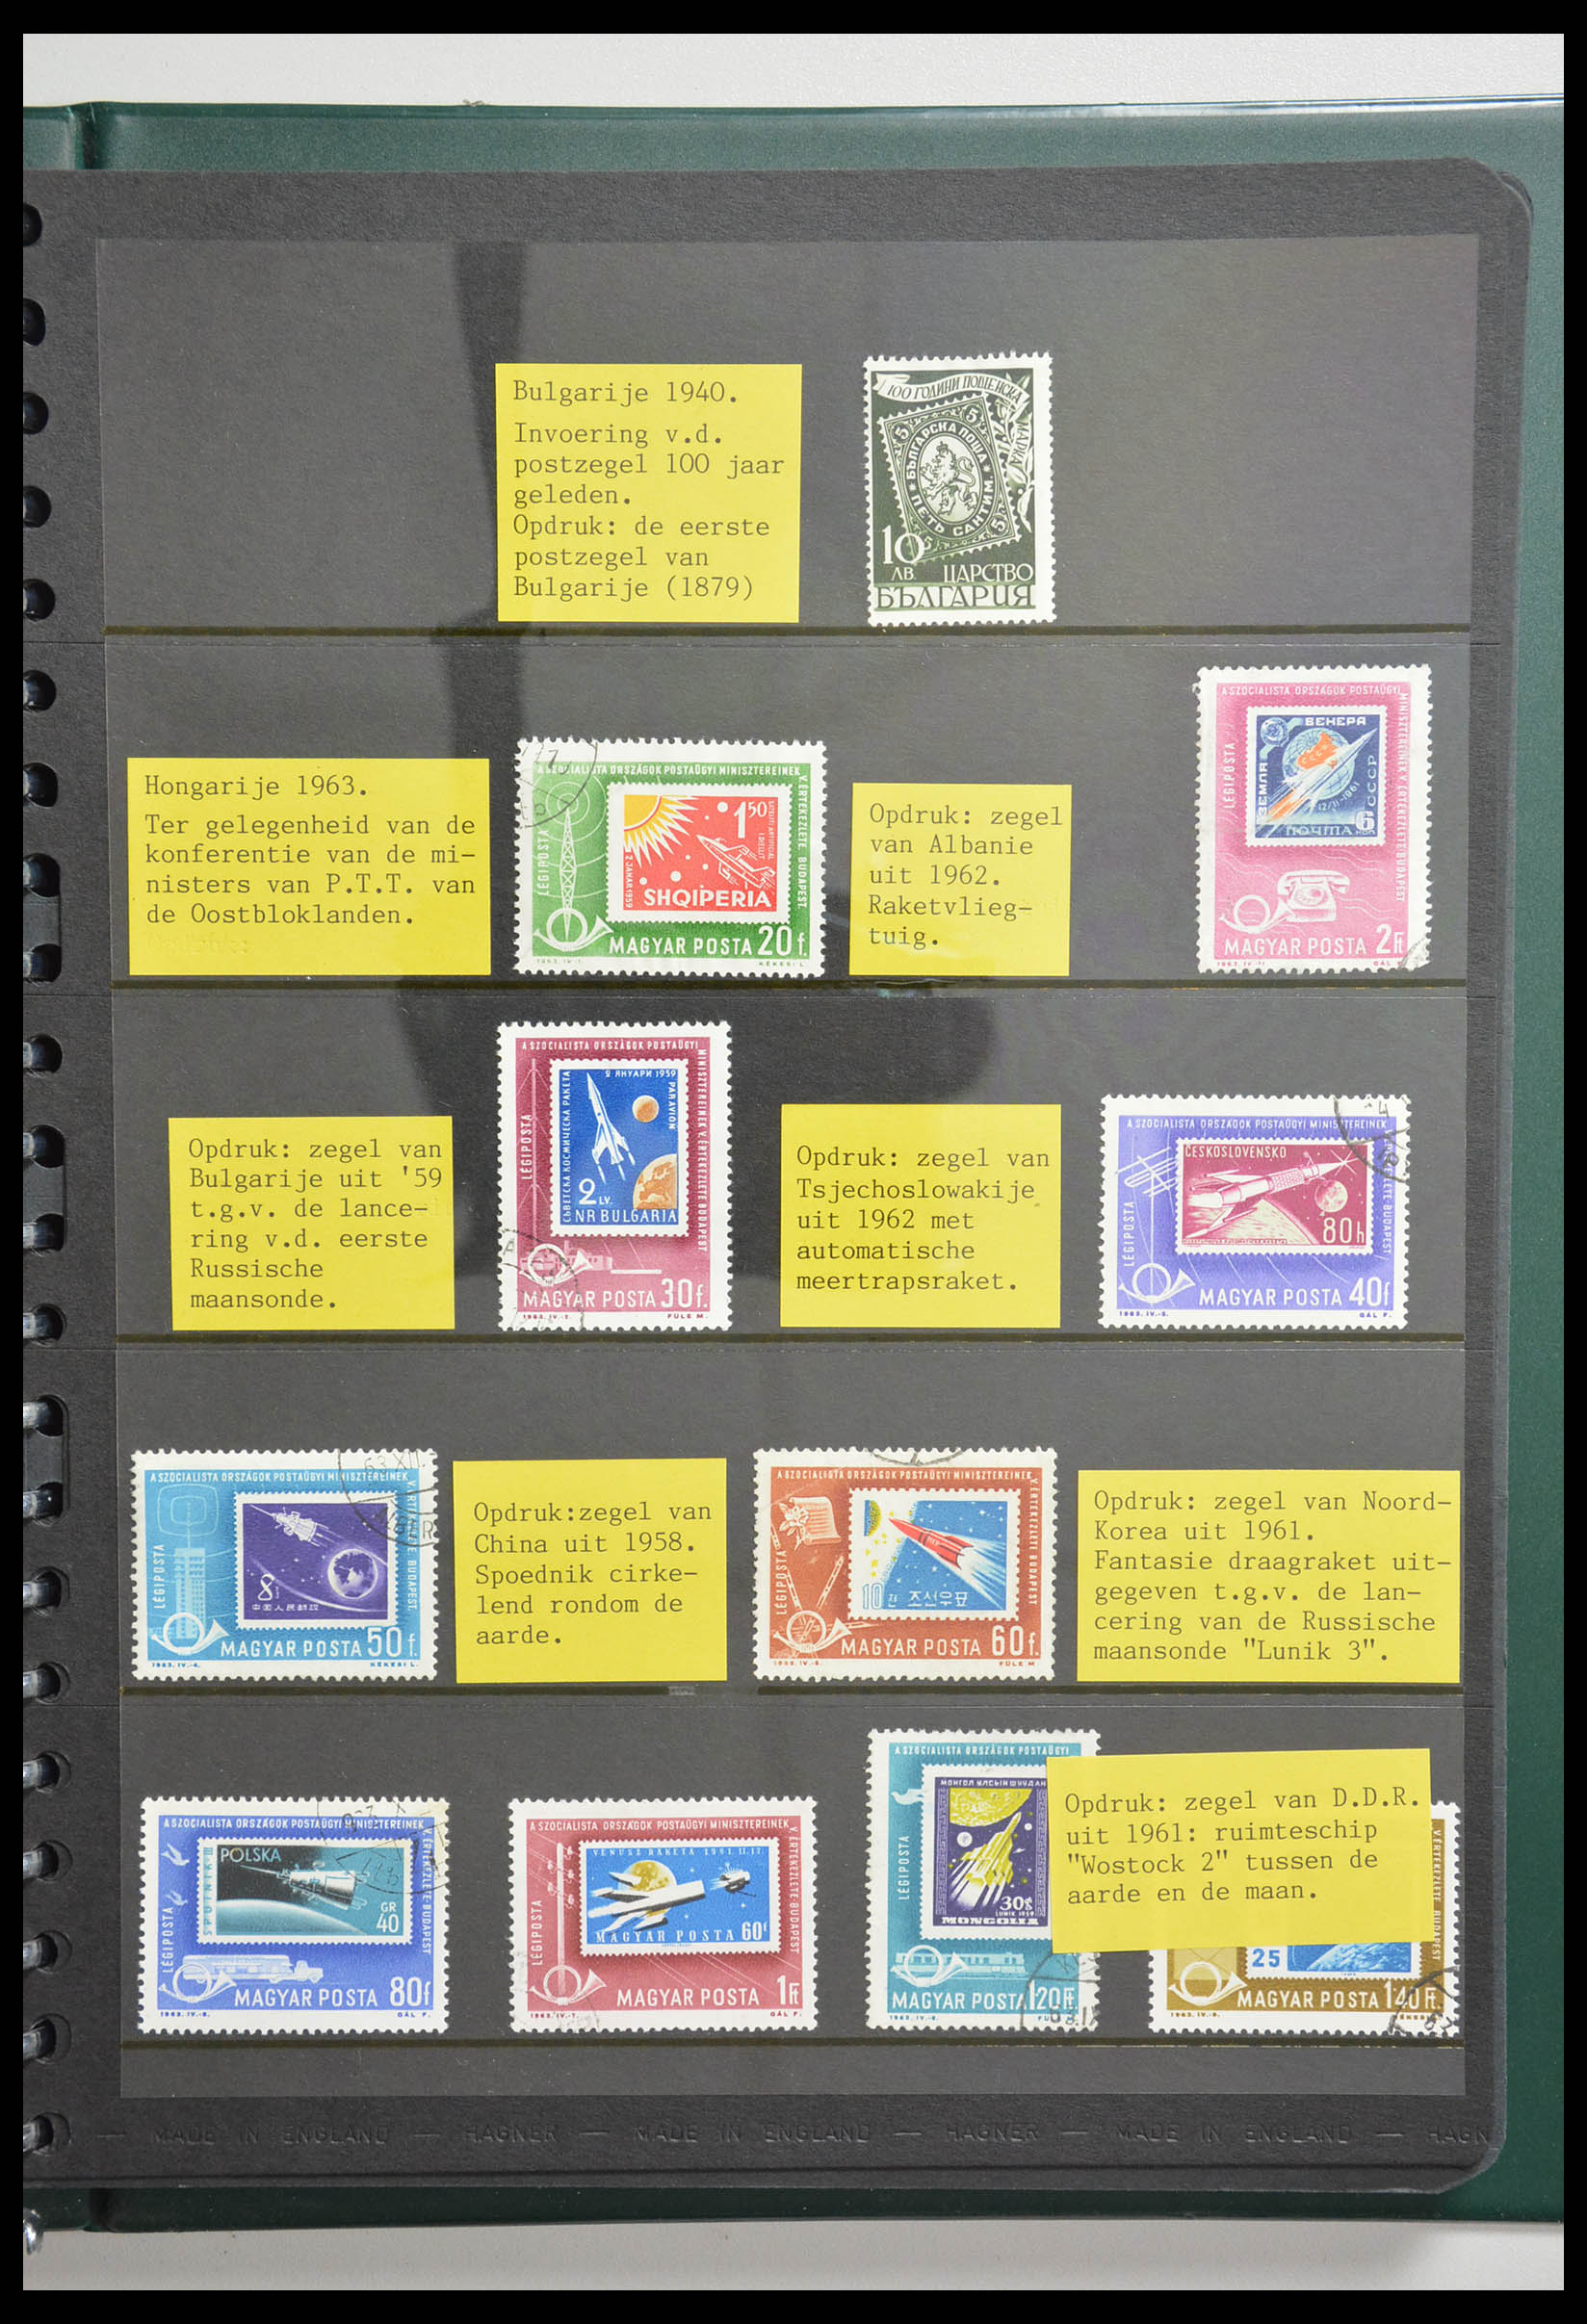 28337 107 - 28337 Postzegel op postzegel 1840-2001.